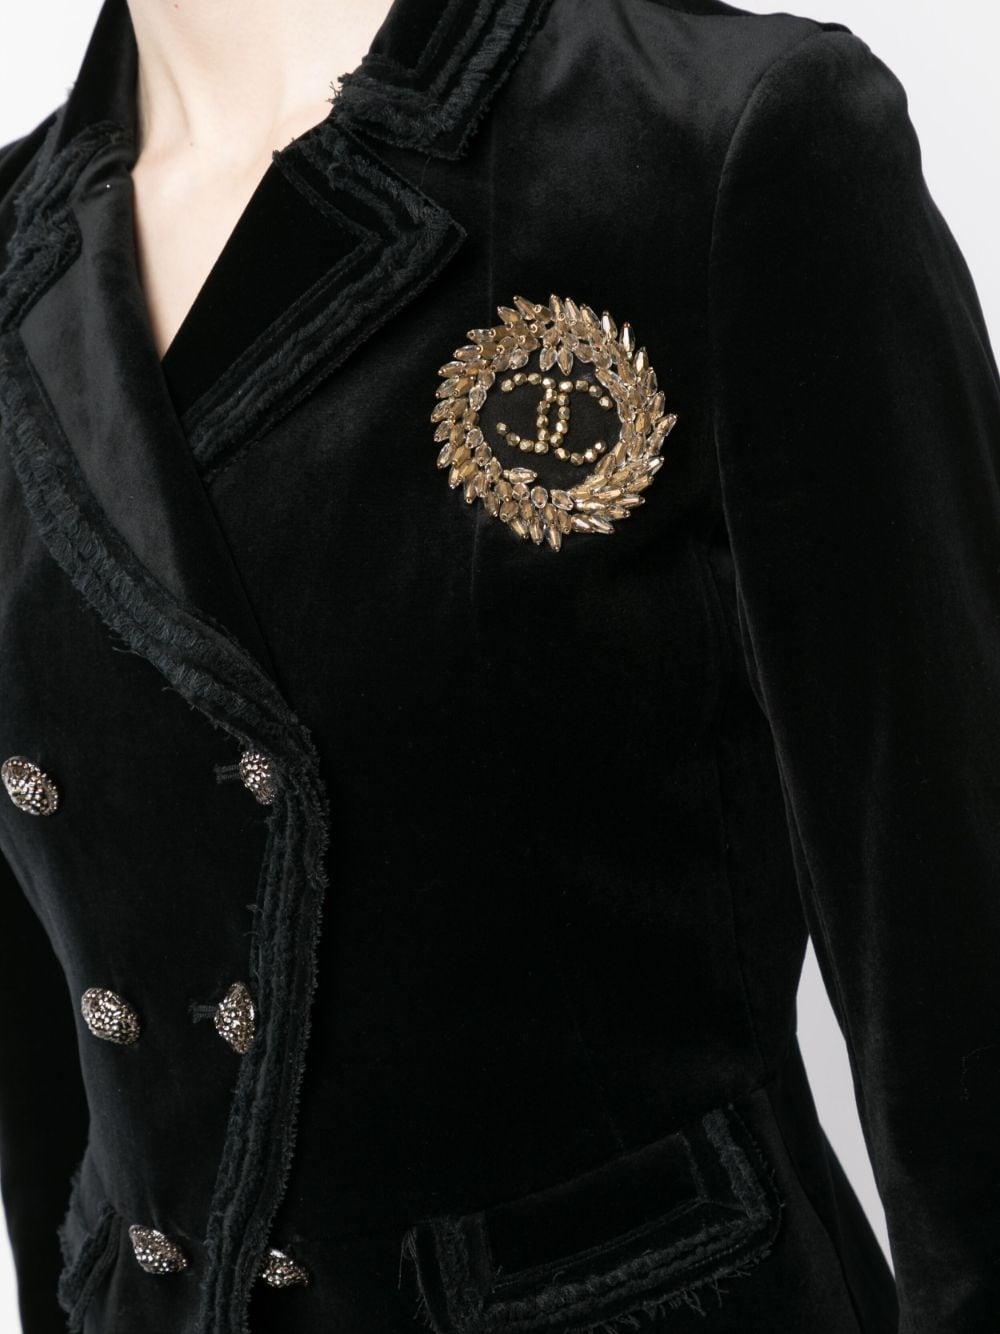 Women's or Men's Chanel Claudia Schiffer CC Patch Black Jacket